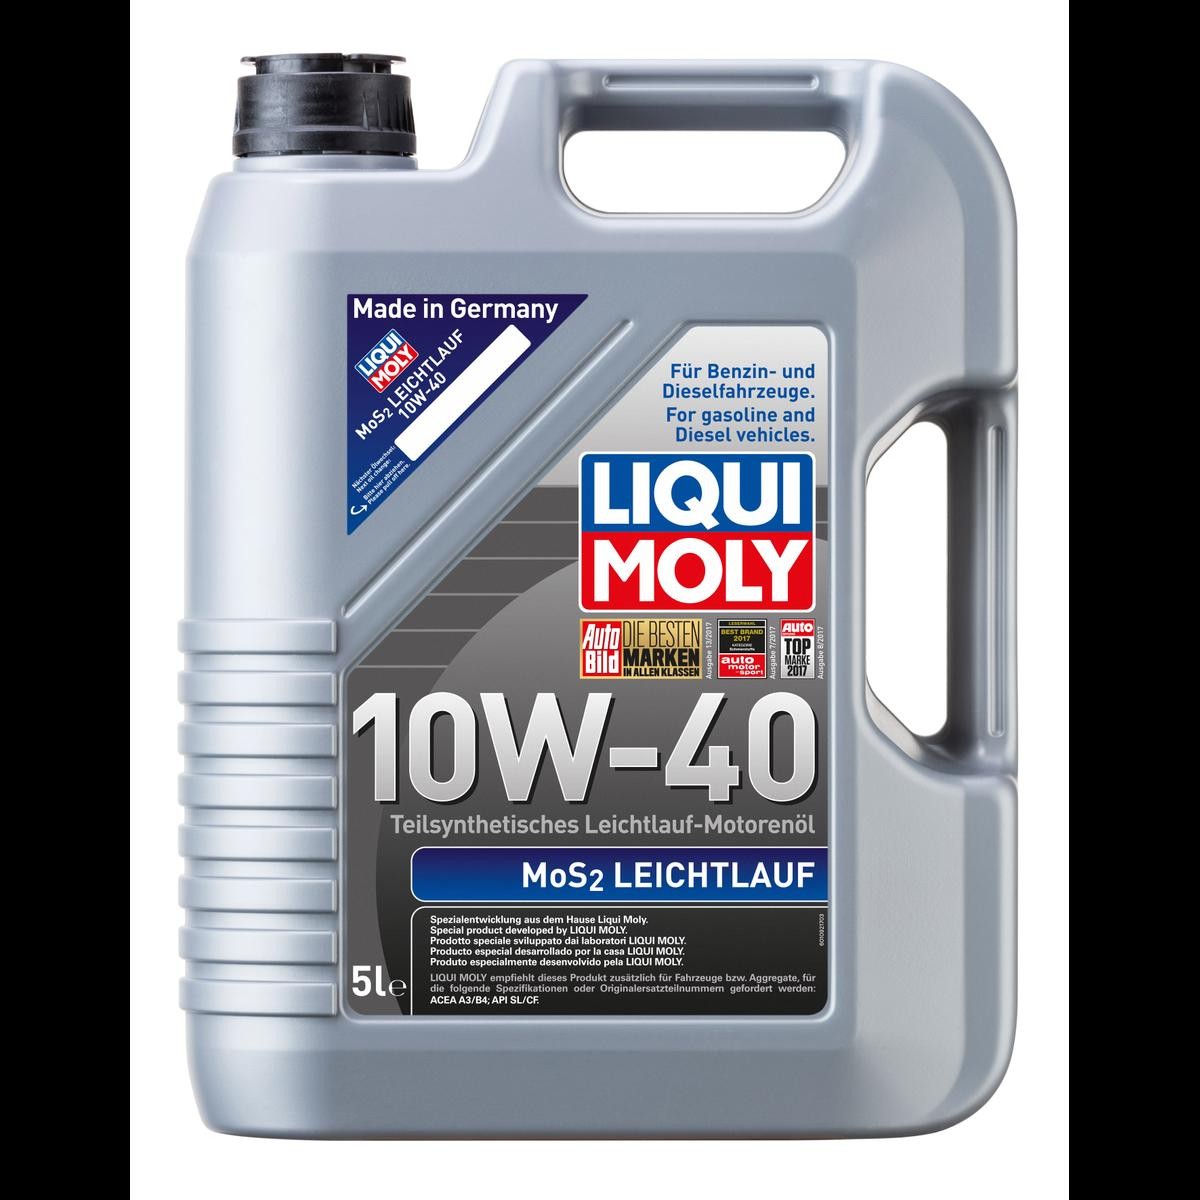 Motorový olej 1092 od LIQUI MOLY